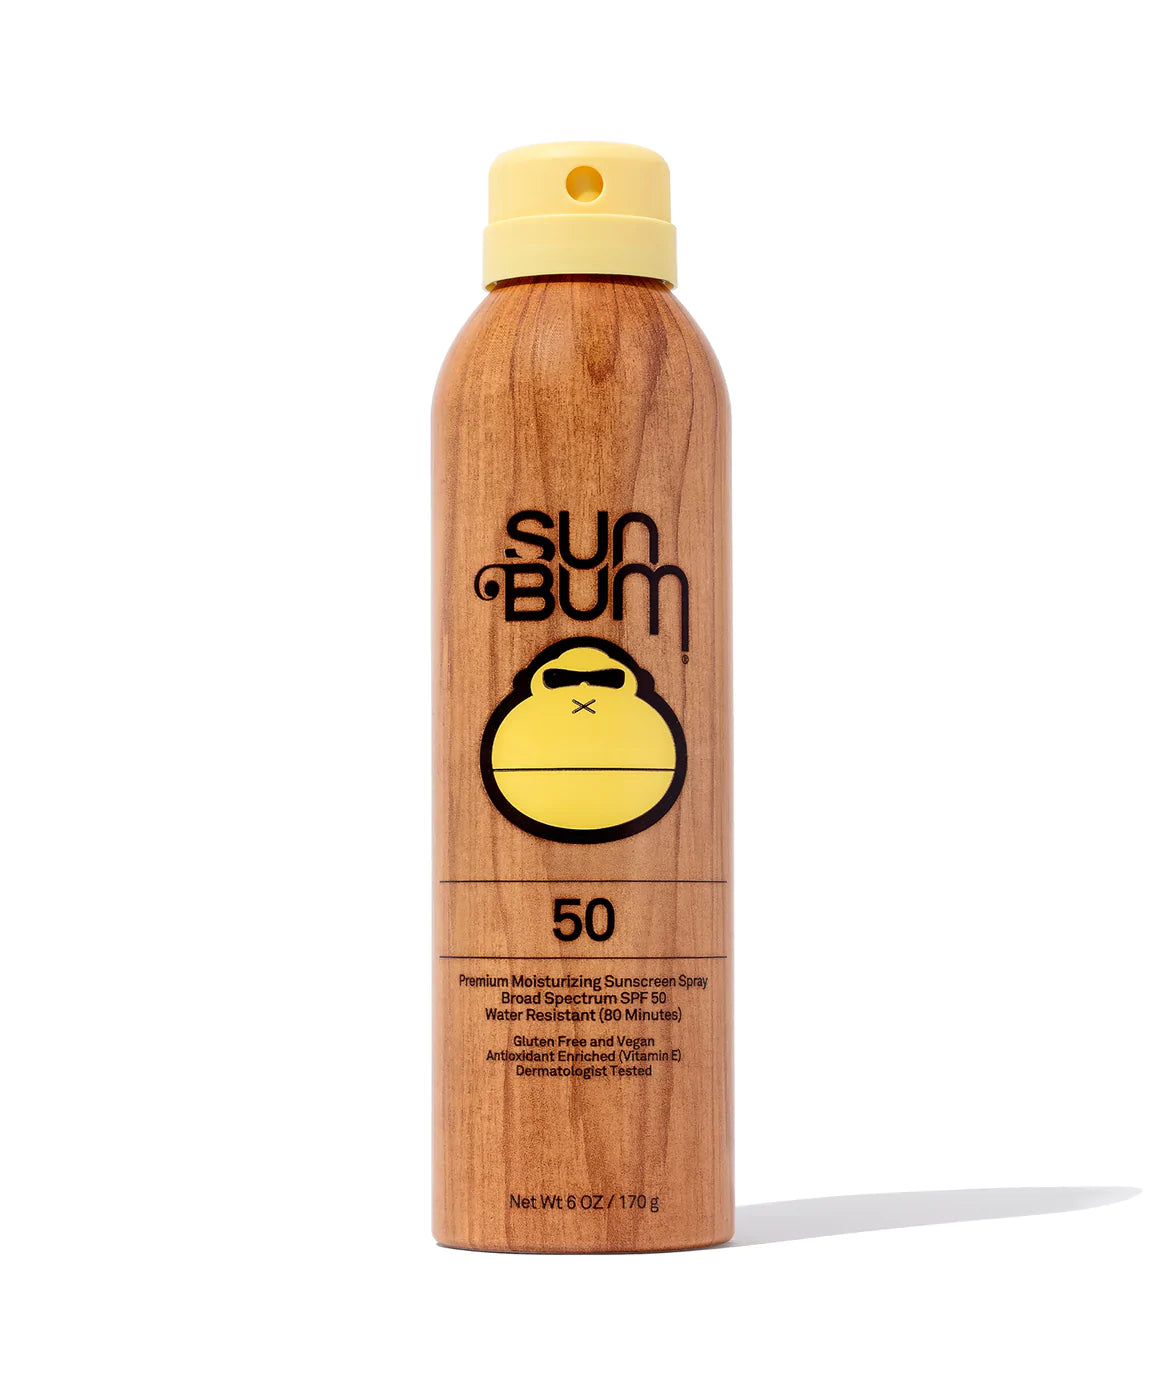 SUN BUM - ORIGINAL SPF 50 SUNSCREEN SPRAY 6 oz